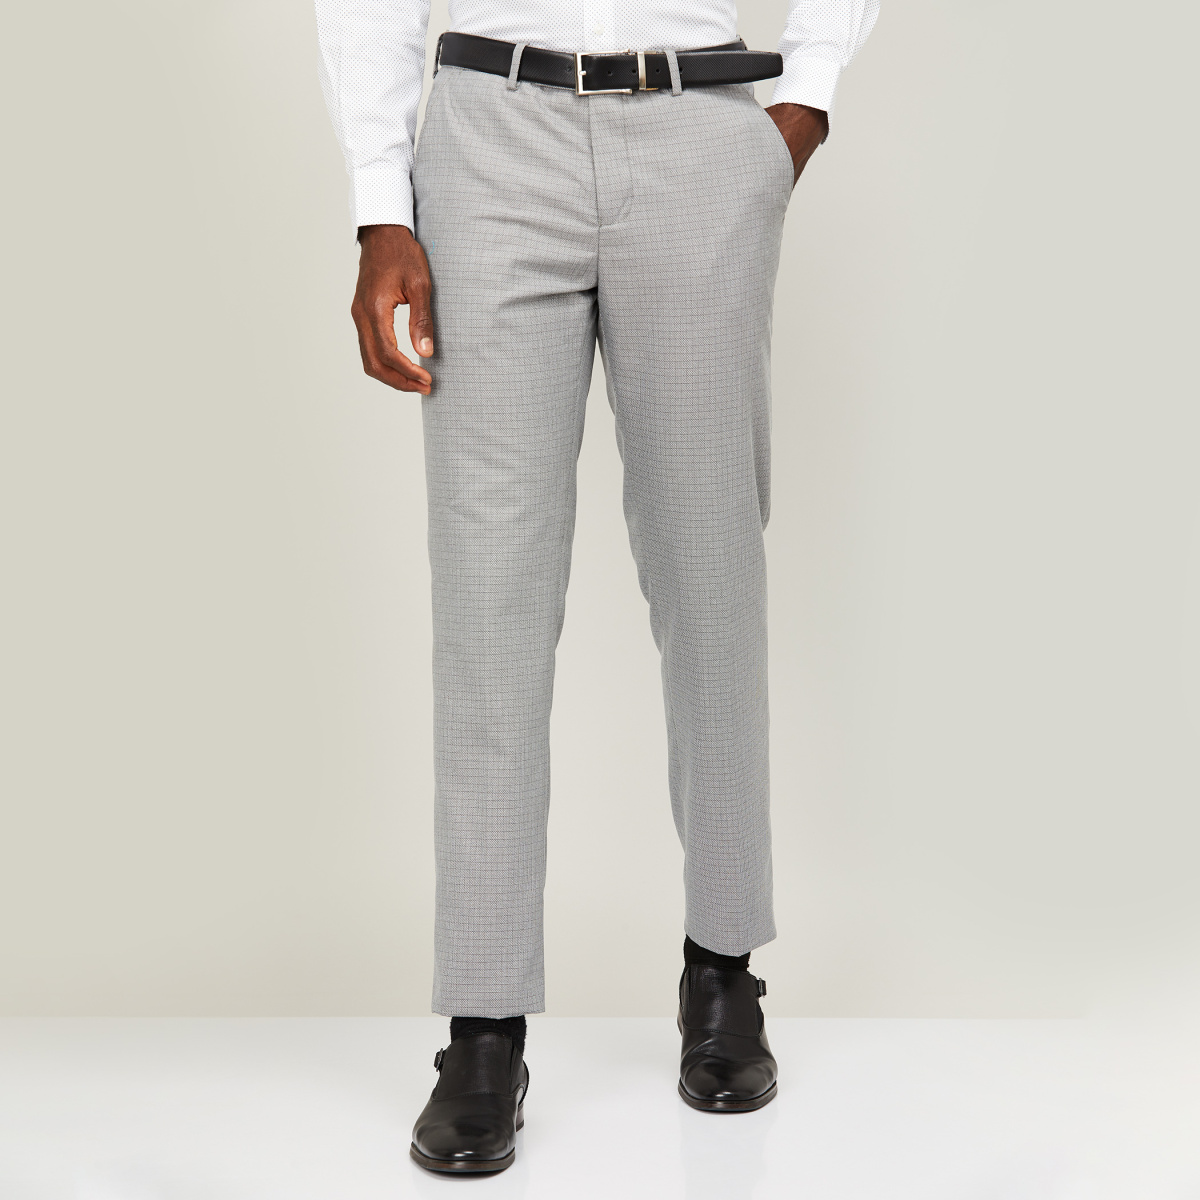 Buy ASHTAG  Checks Formal Trousers  Cotton  Formal Chinos  Grey  XS at  Amazonin